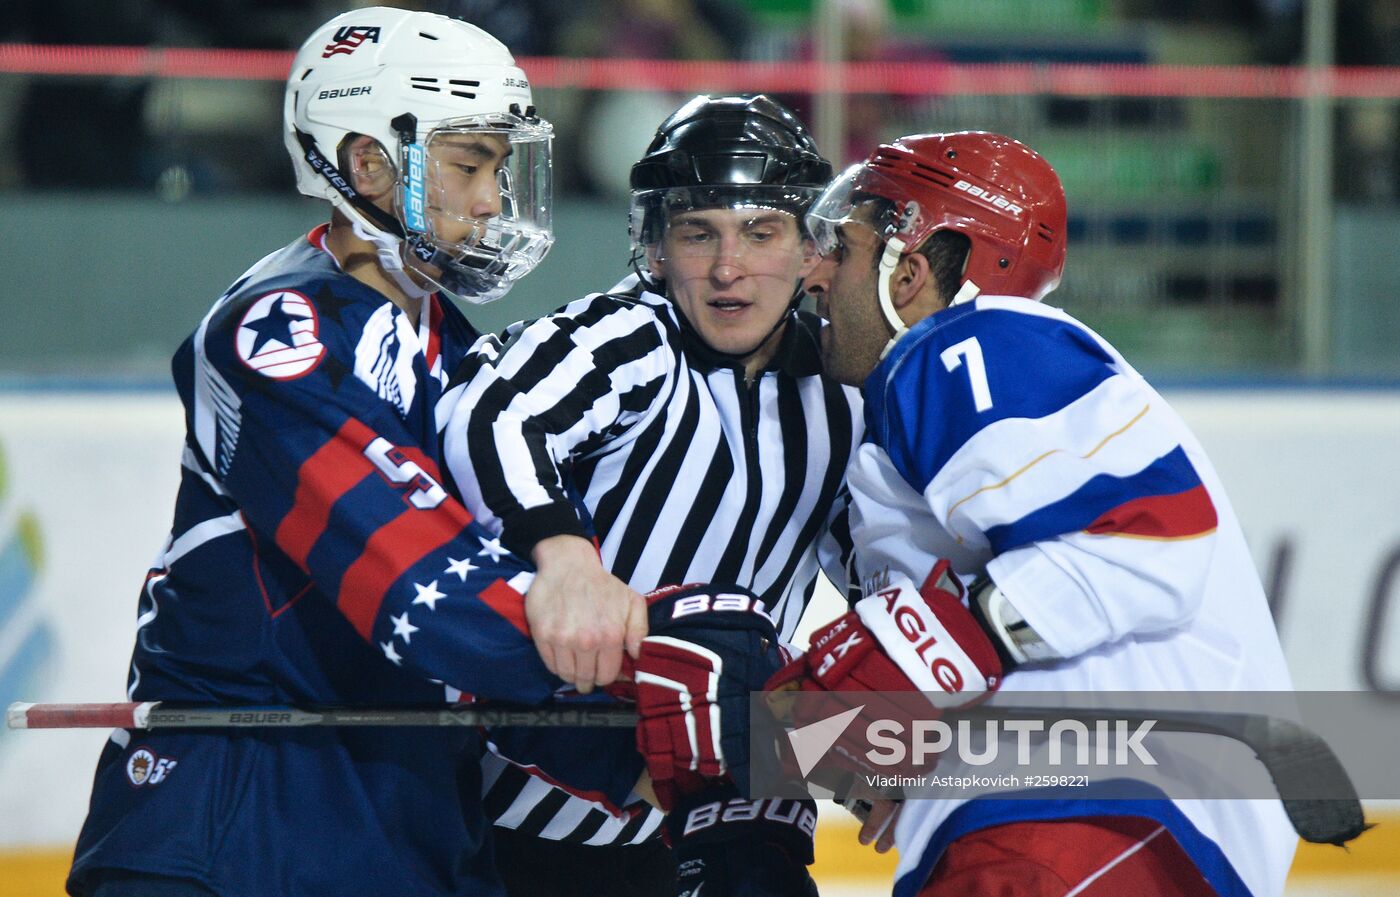 2015 Winter Deaflympics. Hockey. Russia vs. United States